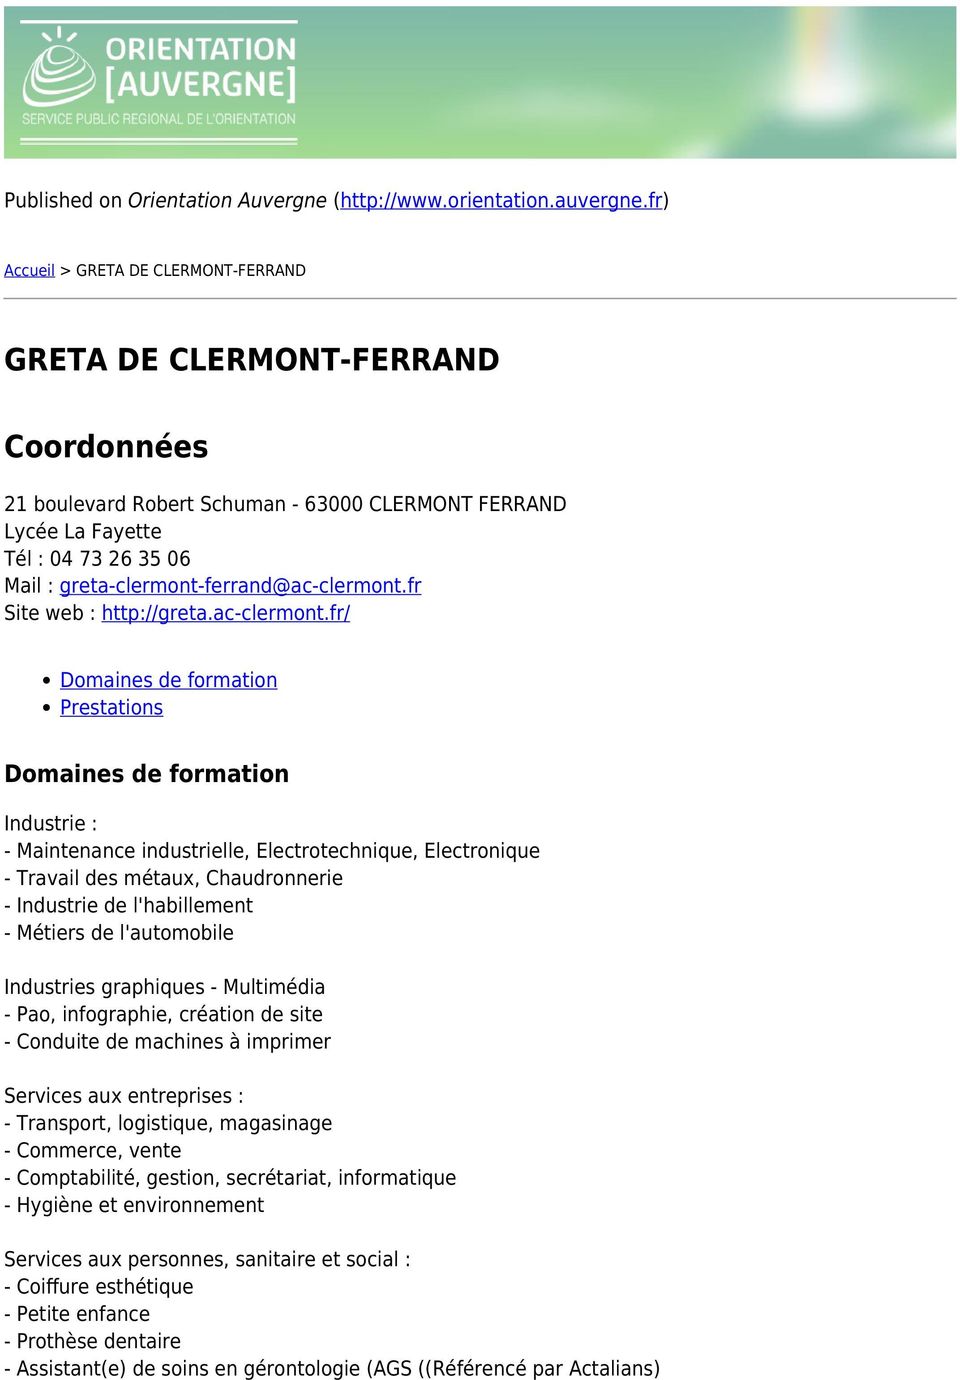 greta-clermont-ferrand@ac-clermont.